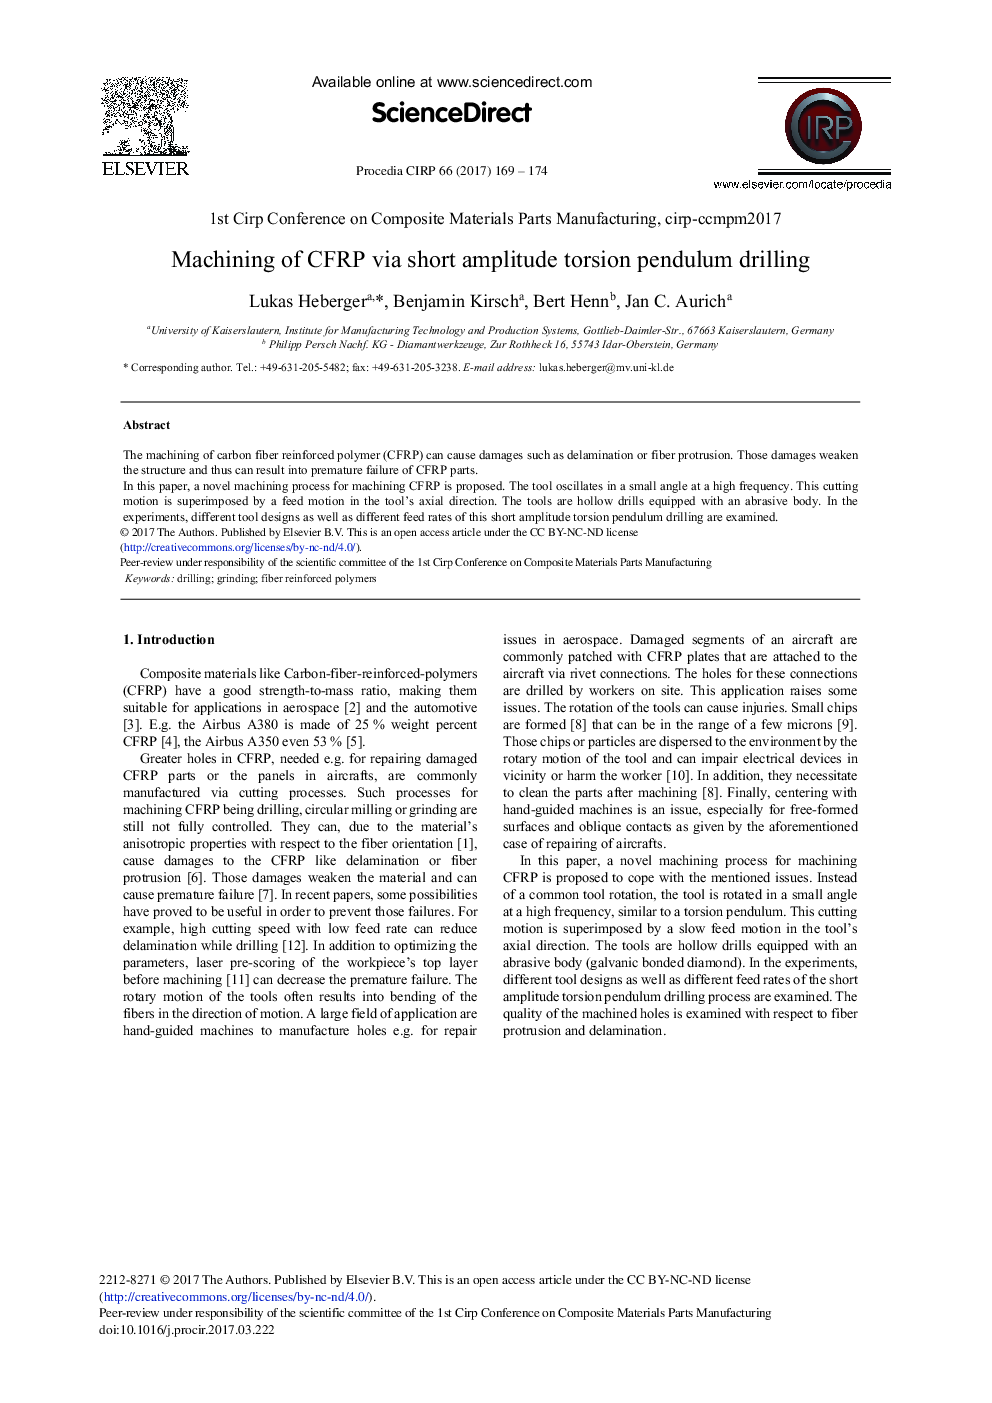 Machining of CFRP via Short Amplitude Torsion Pendulum Drilling